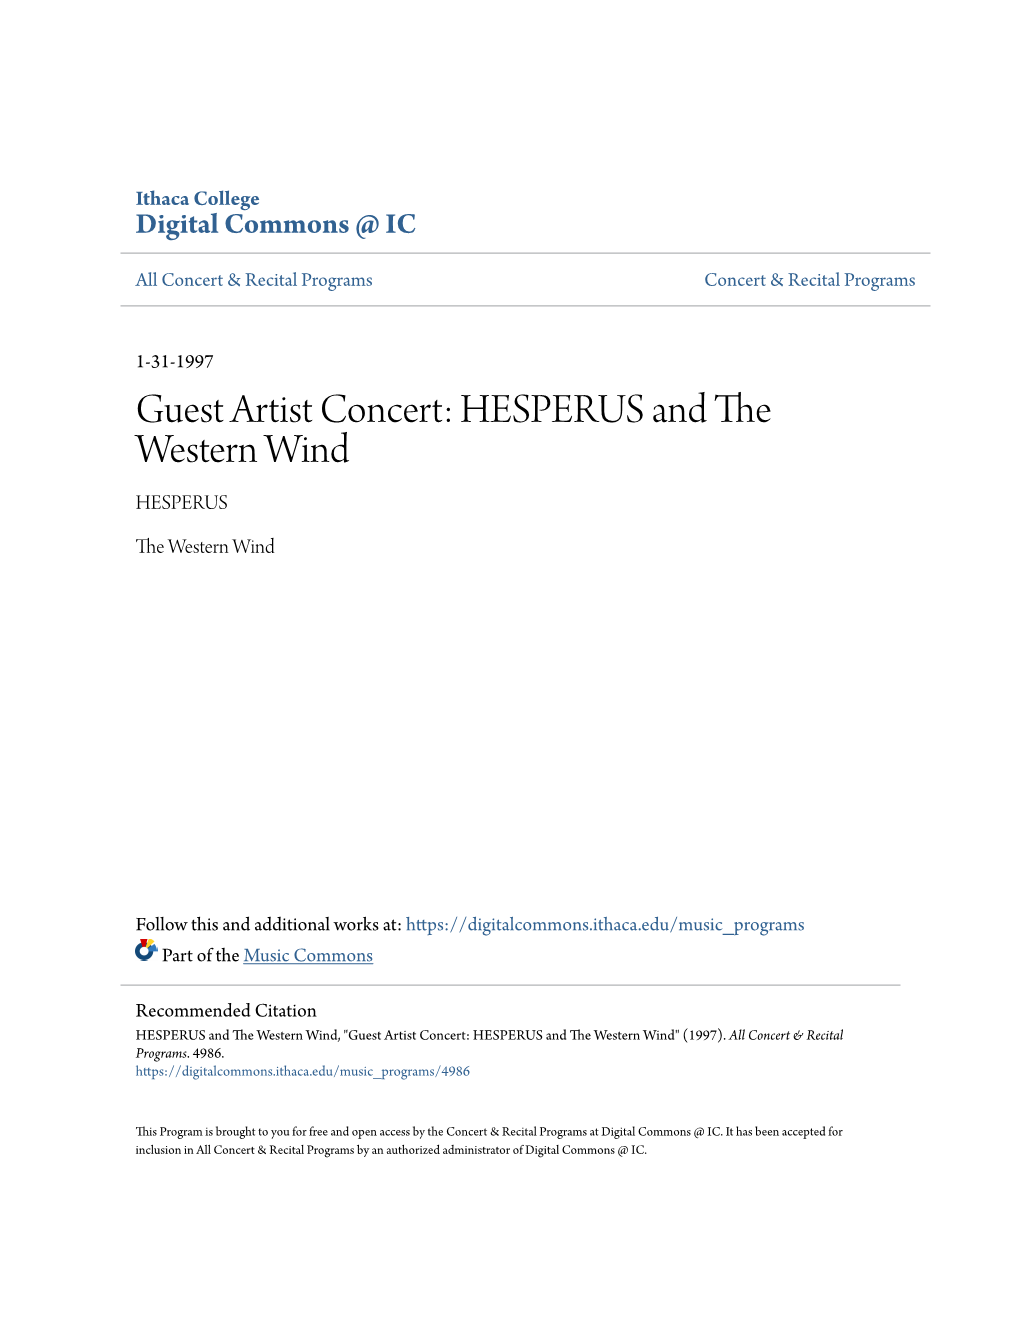 Guest Artist Concert: HESPERUS and the Western Wind HESPERUS